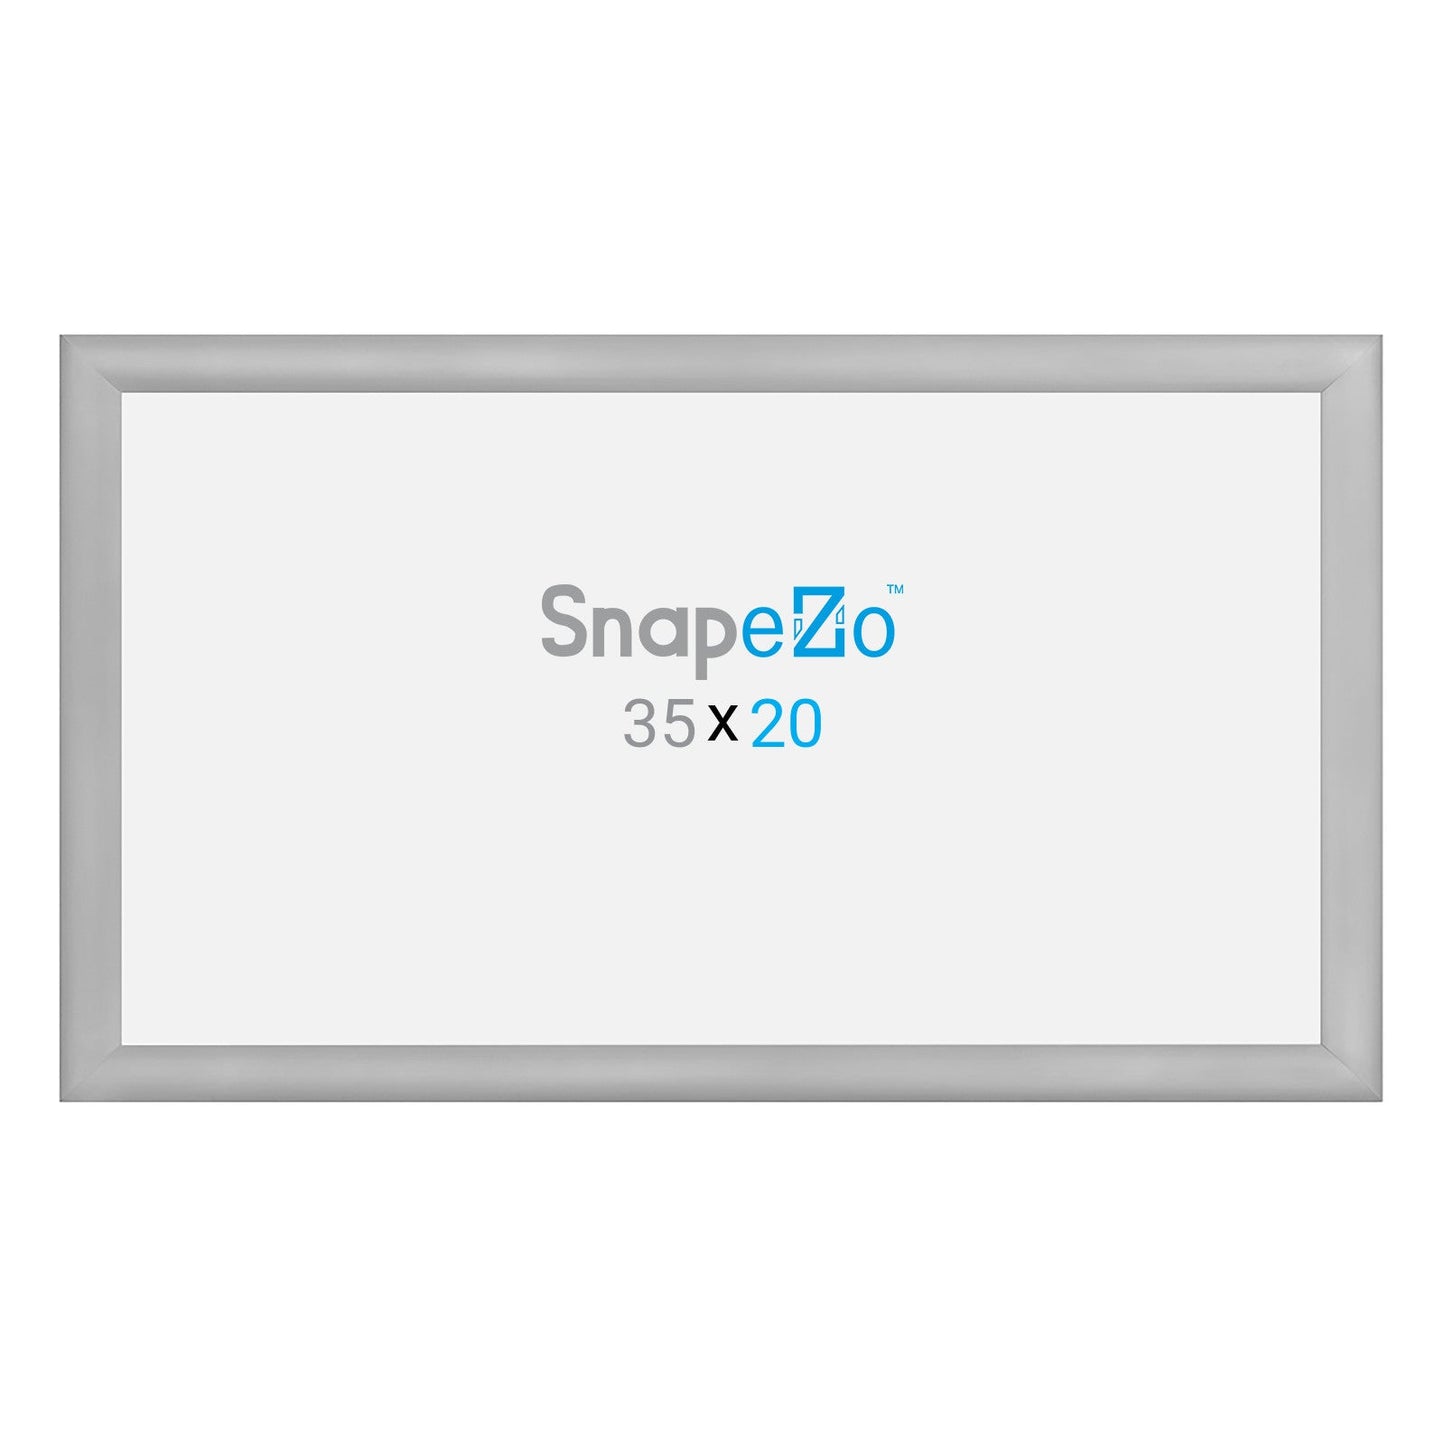 20x35 Silver SnapeZo® Snap Frame - 1.2" Profile